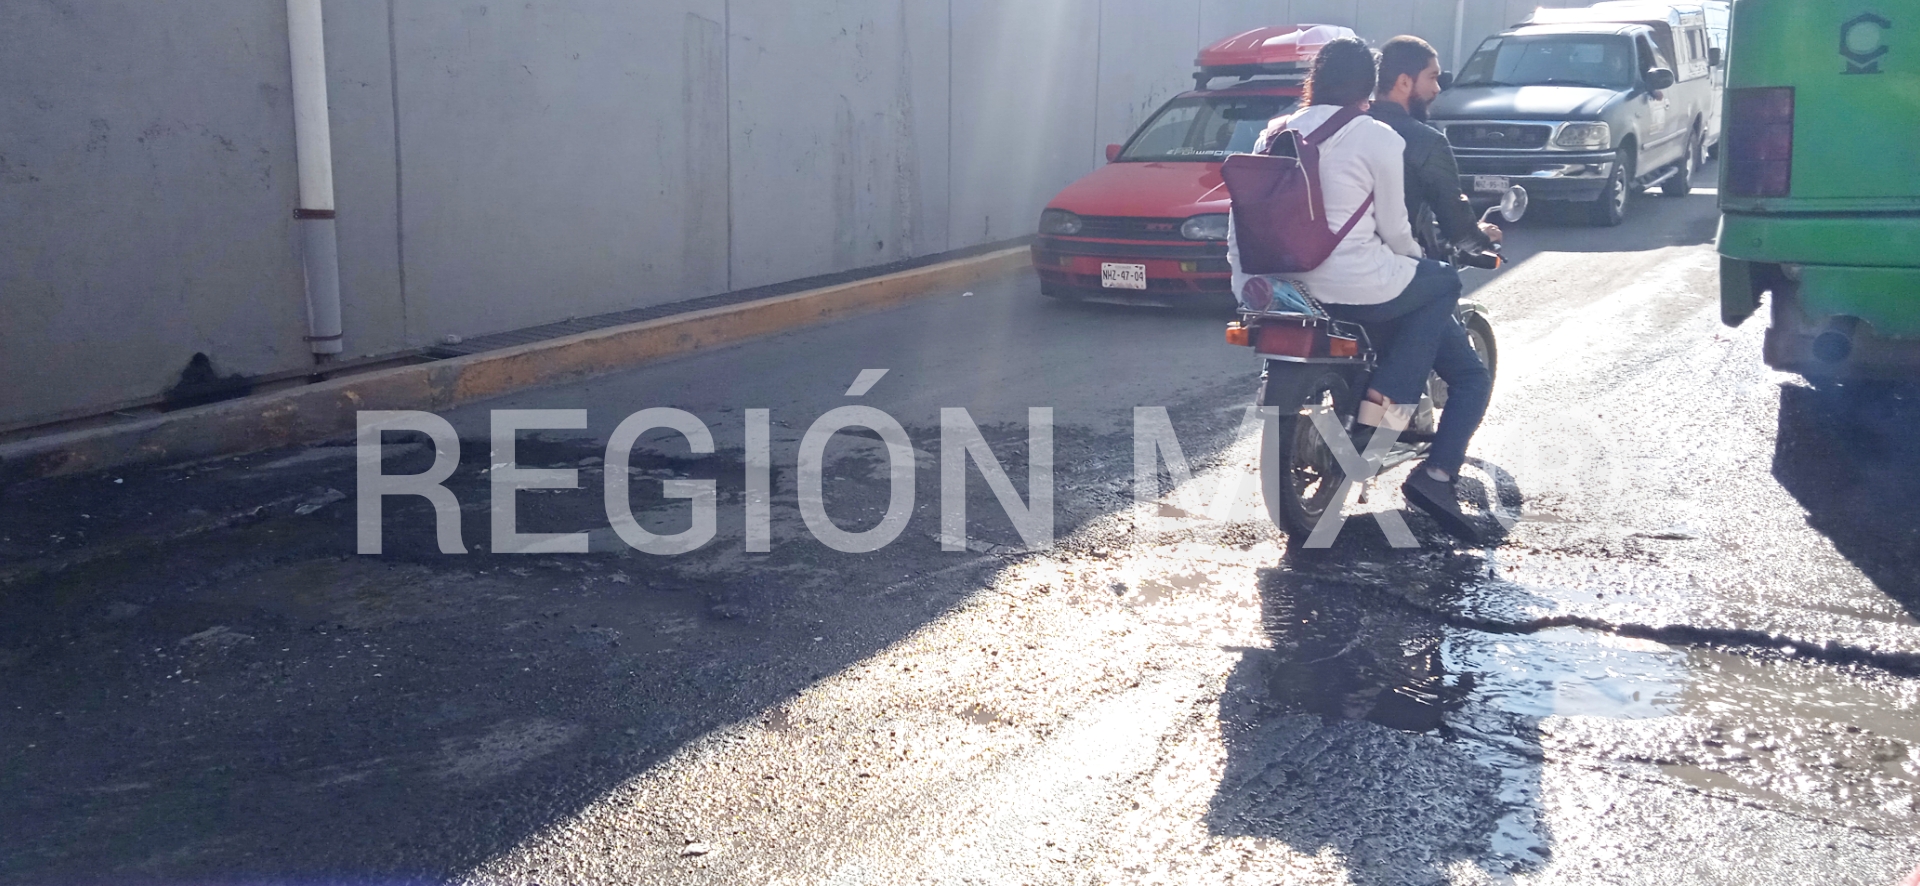 Puente de calzada de Guadalupe, un peligro vehicular #regionmx 